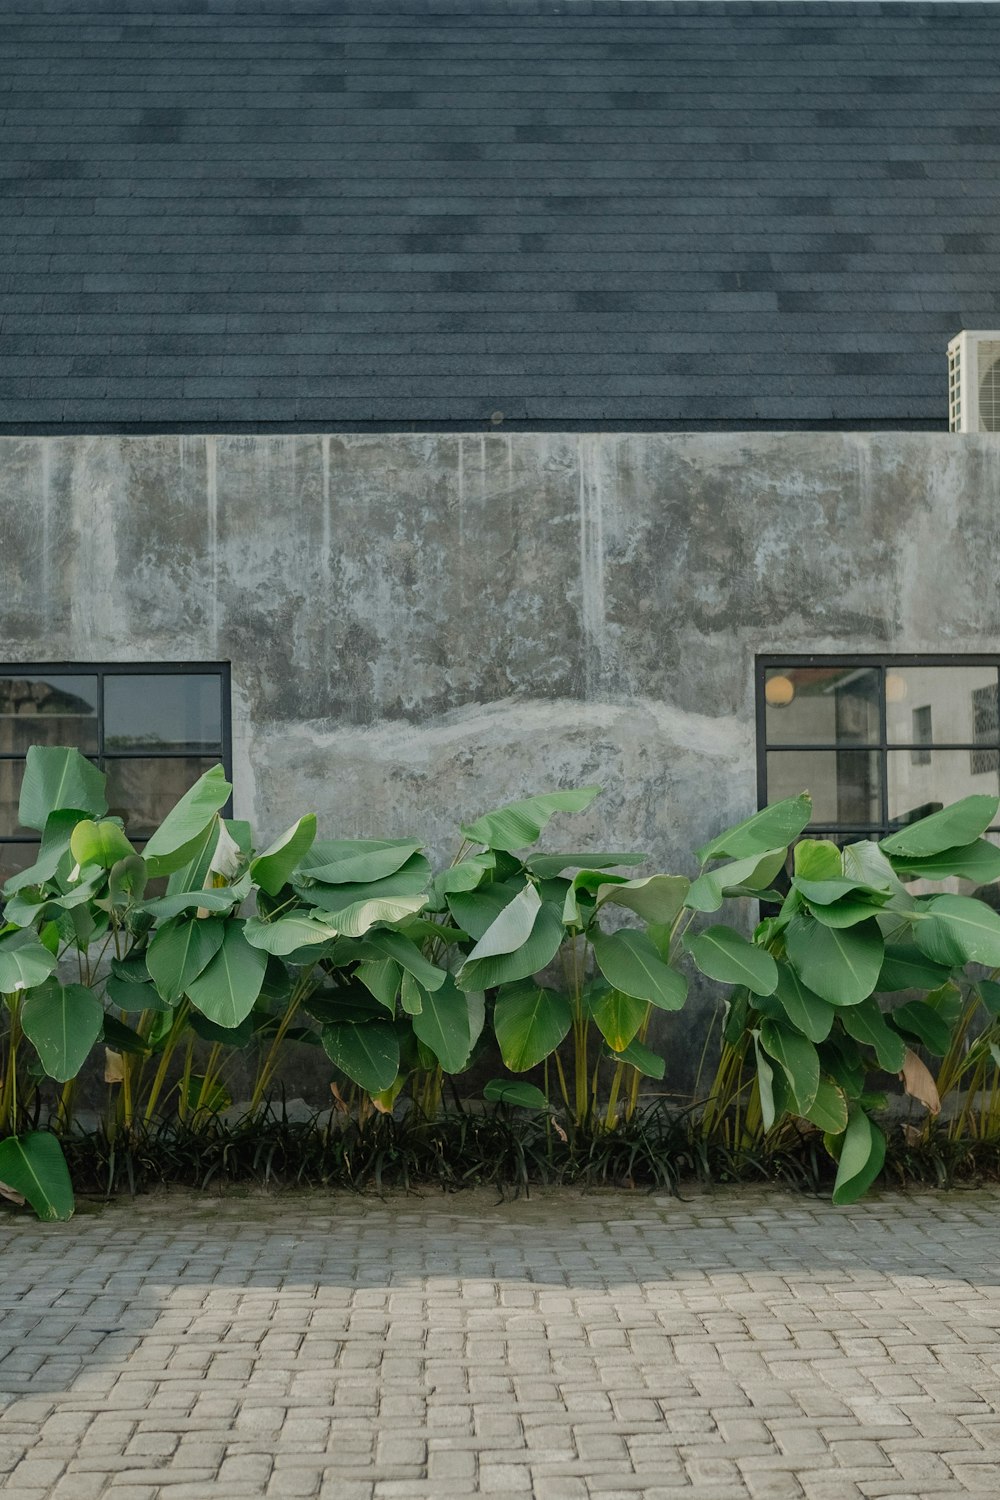 a plant next to a building